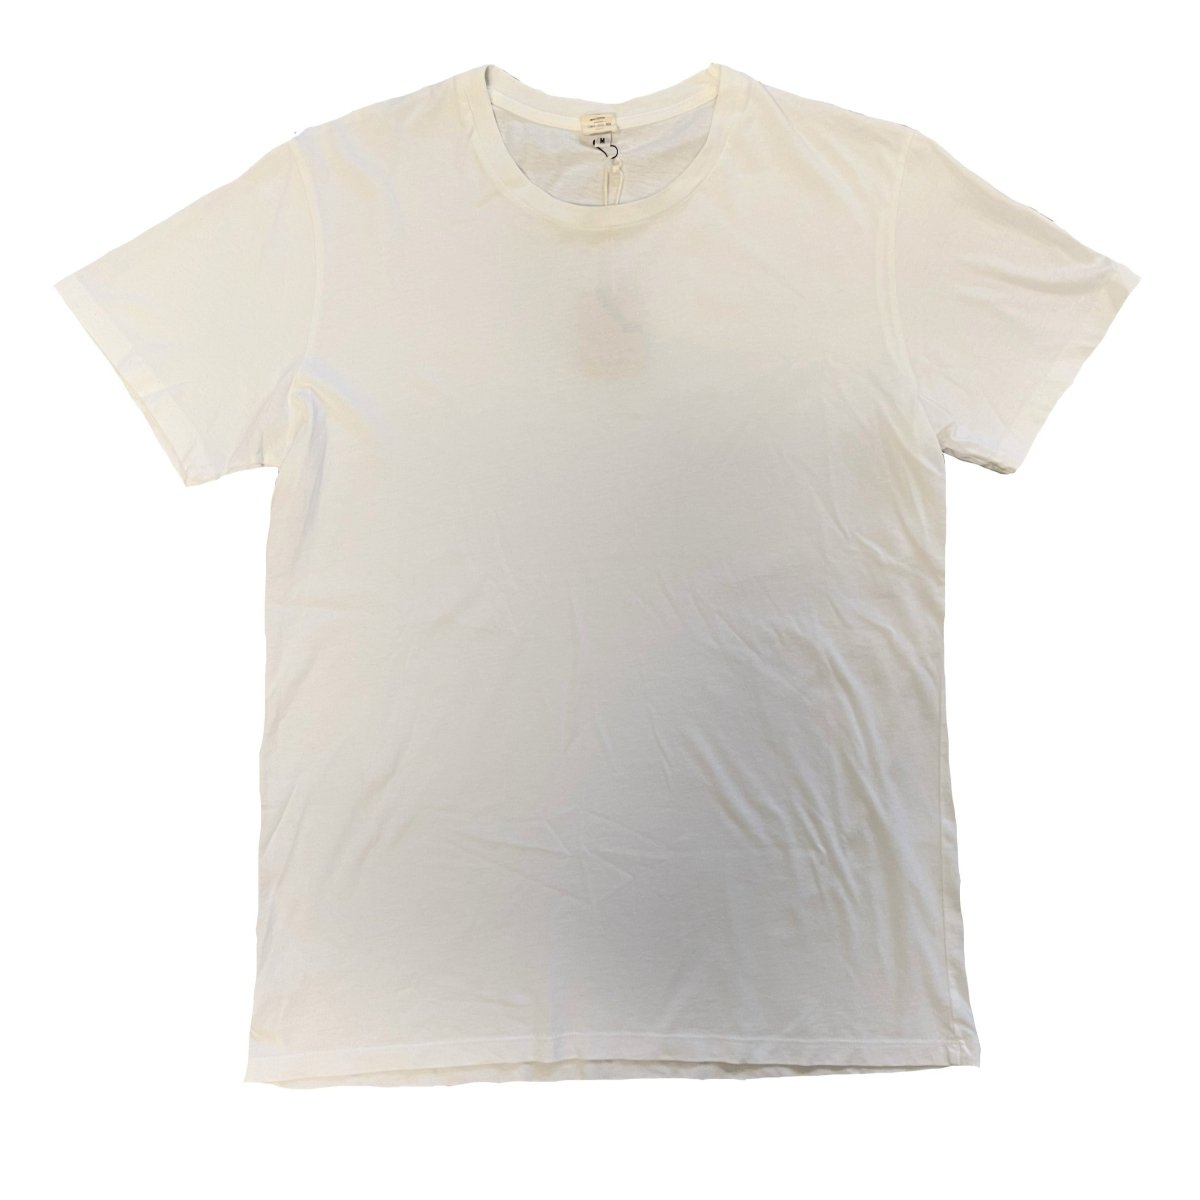 KYOTO Basic T-shirt white - KYOTO - KYOTO